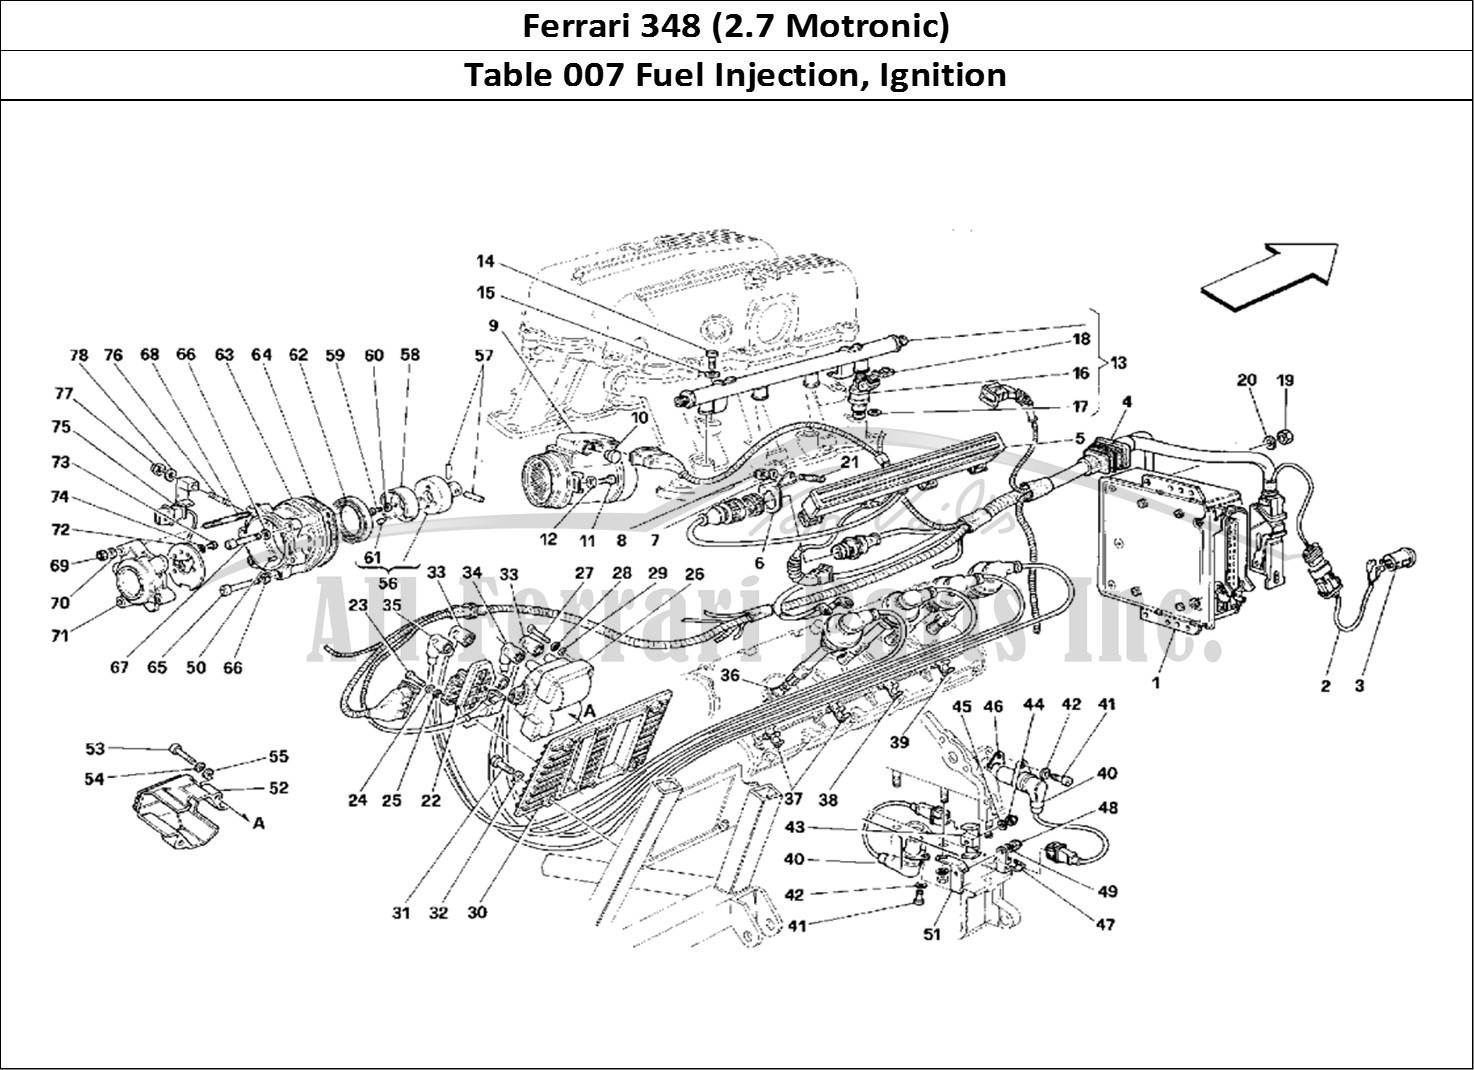 Ferrari Parts Ferrari 348 (2.7 Motronic) Page 007 Air Injection - Ignition